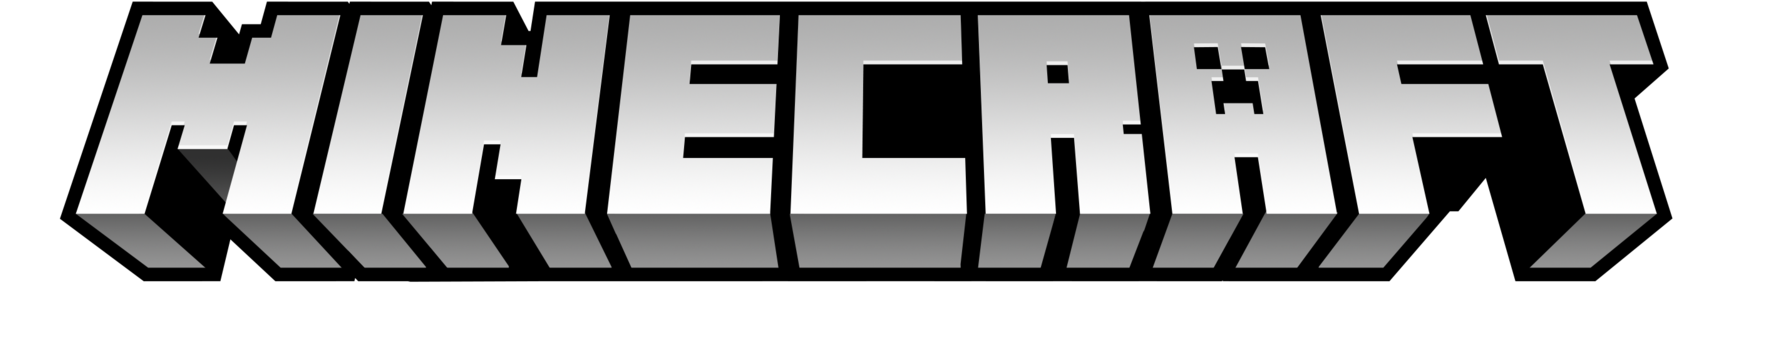 Minecraft Hd Logo By Nuryrush - Minecraft: Story Mode (1765x452)